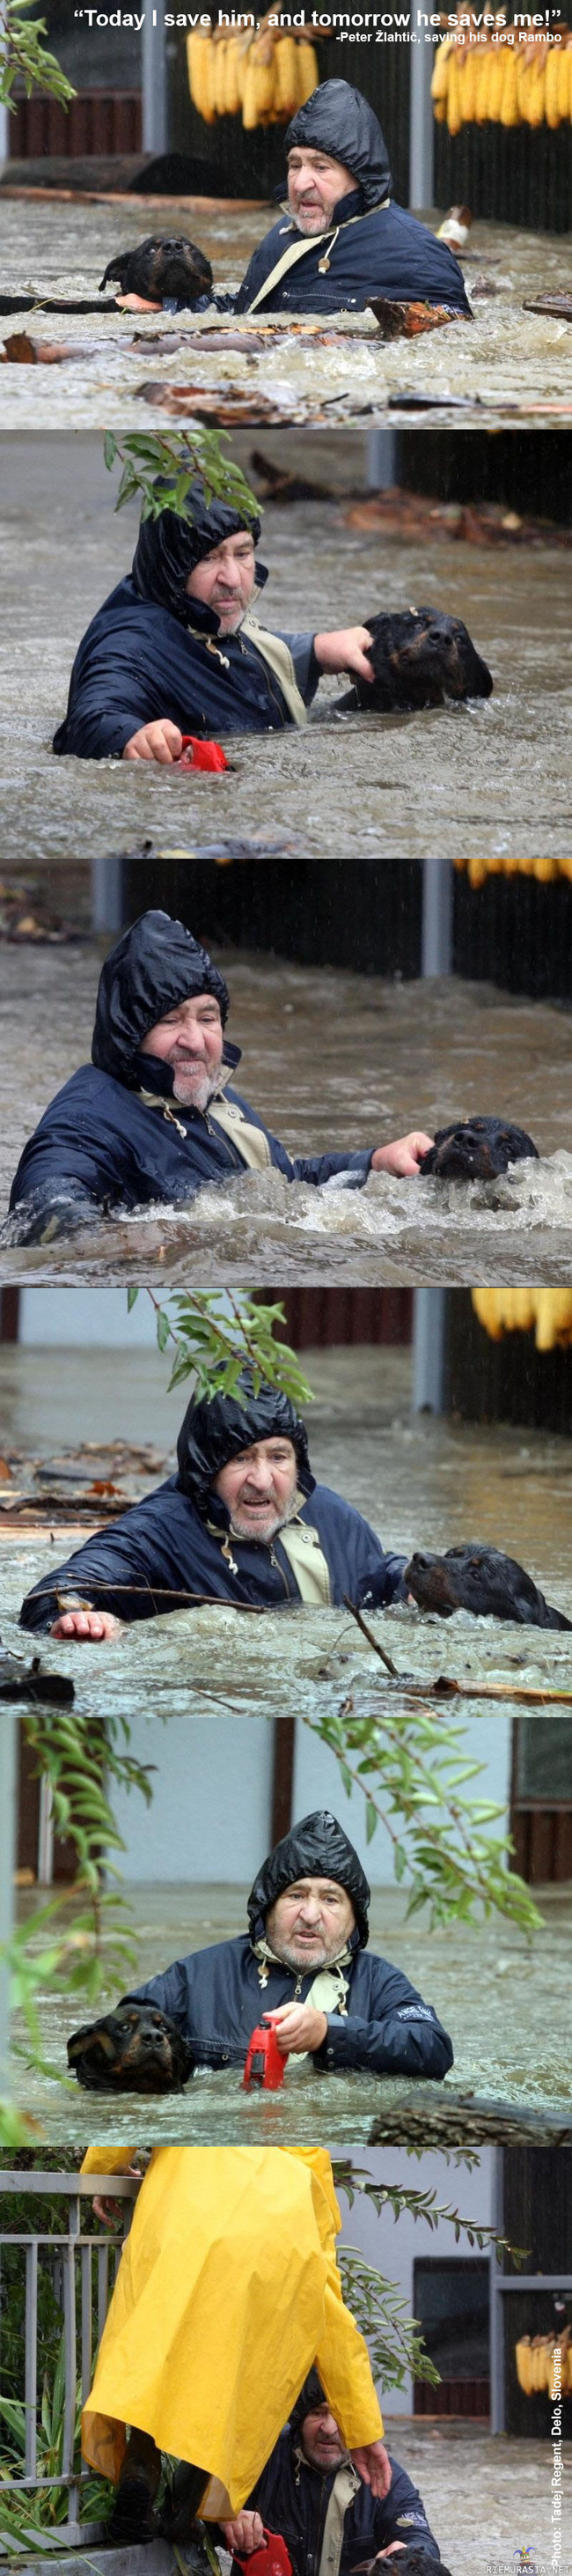 Today I save him, and tomorrow he will save me! - Peter Zlahtic pelastamassa koiraansa tulvassa